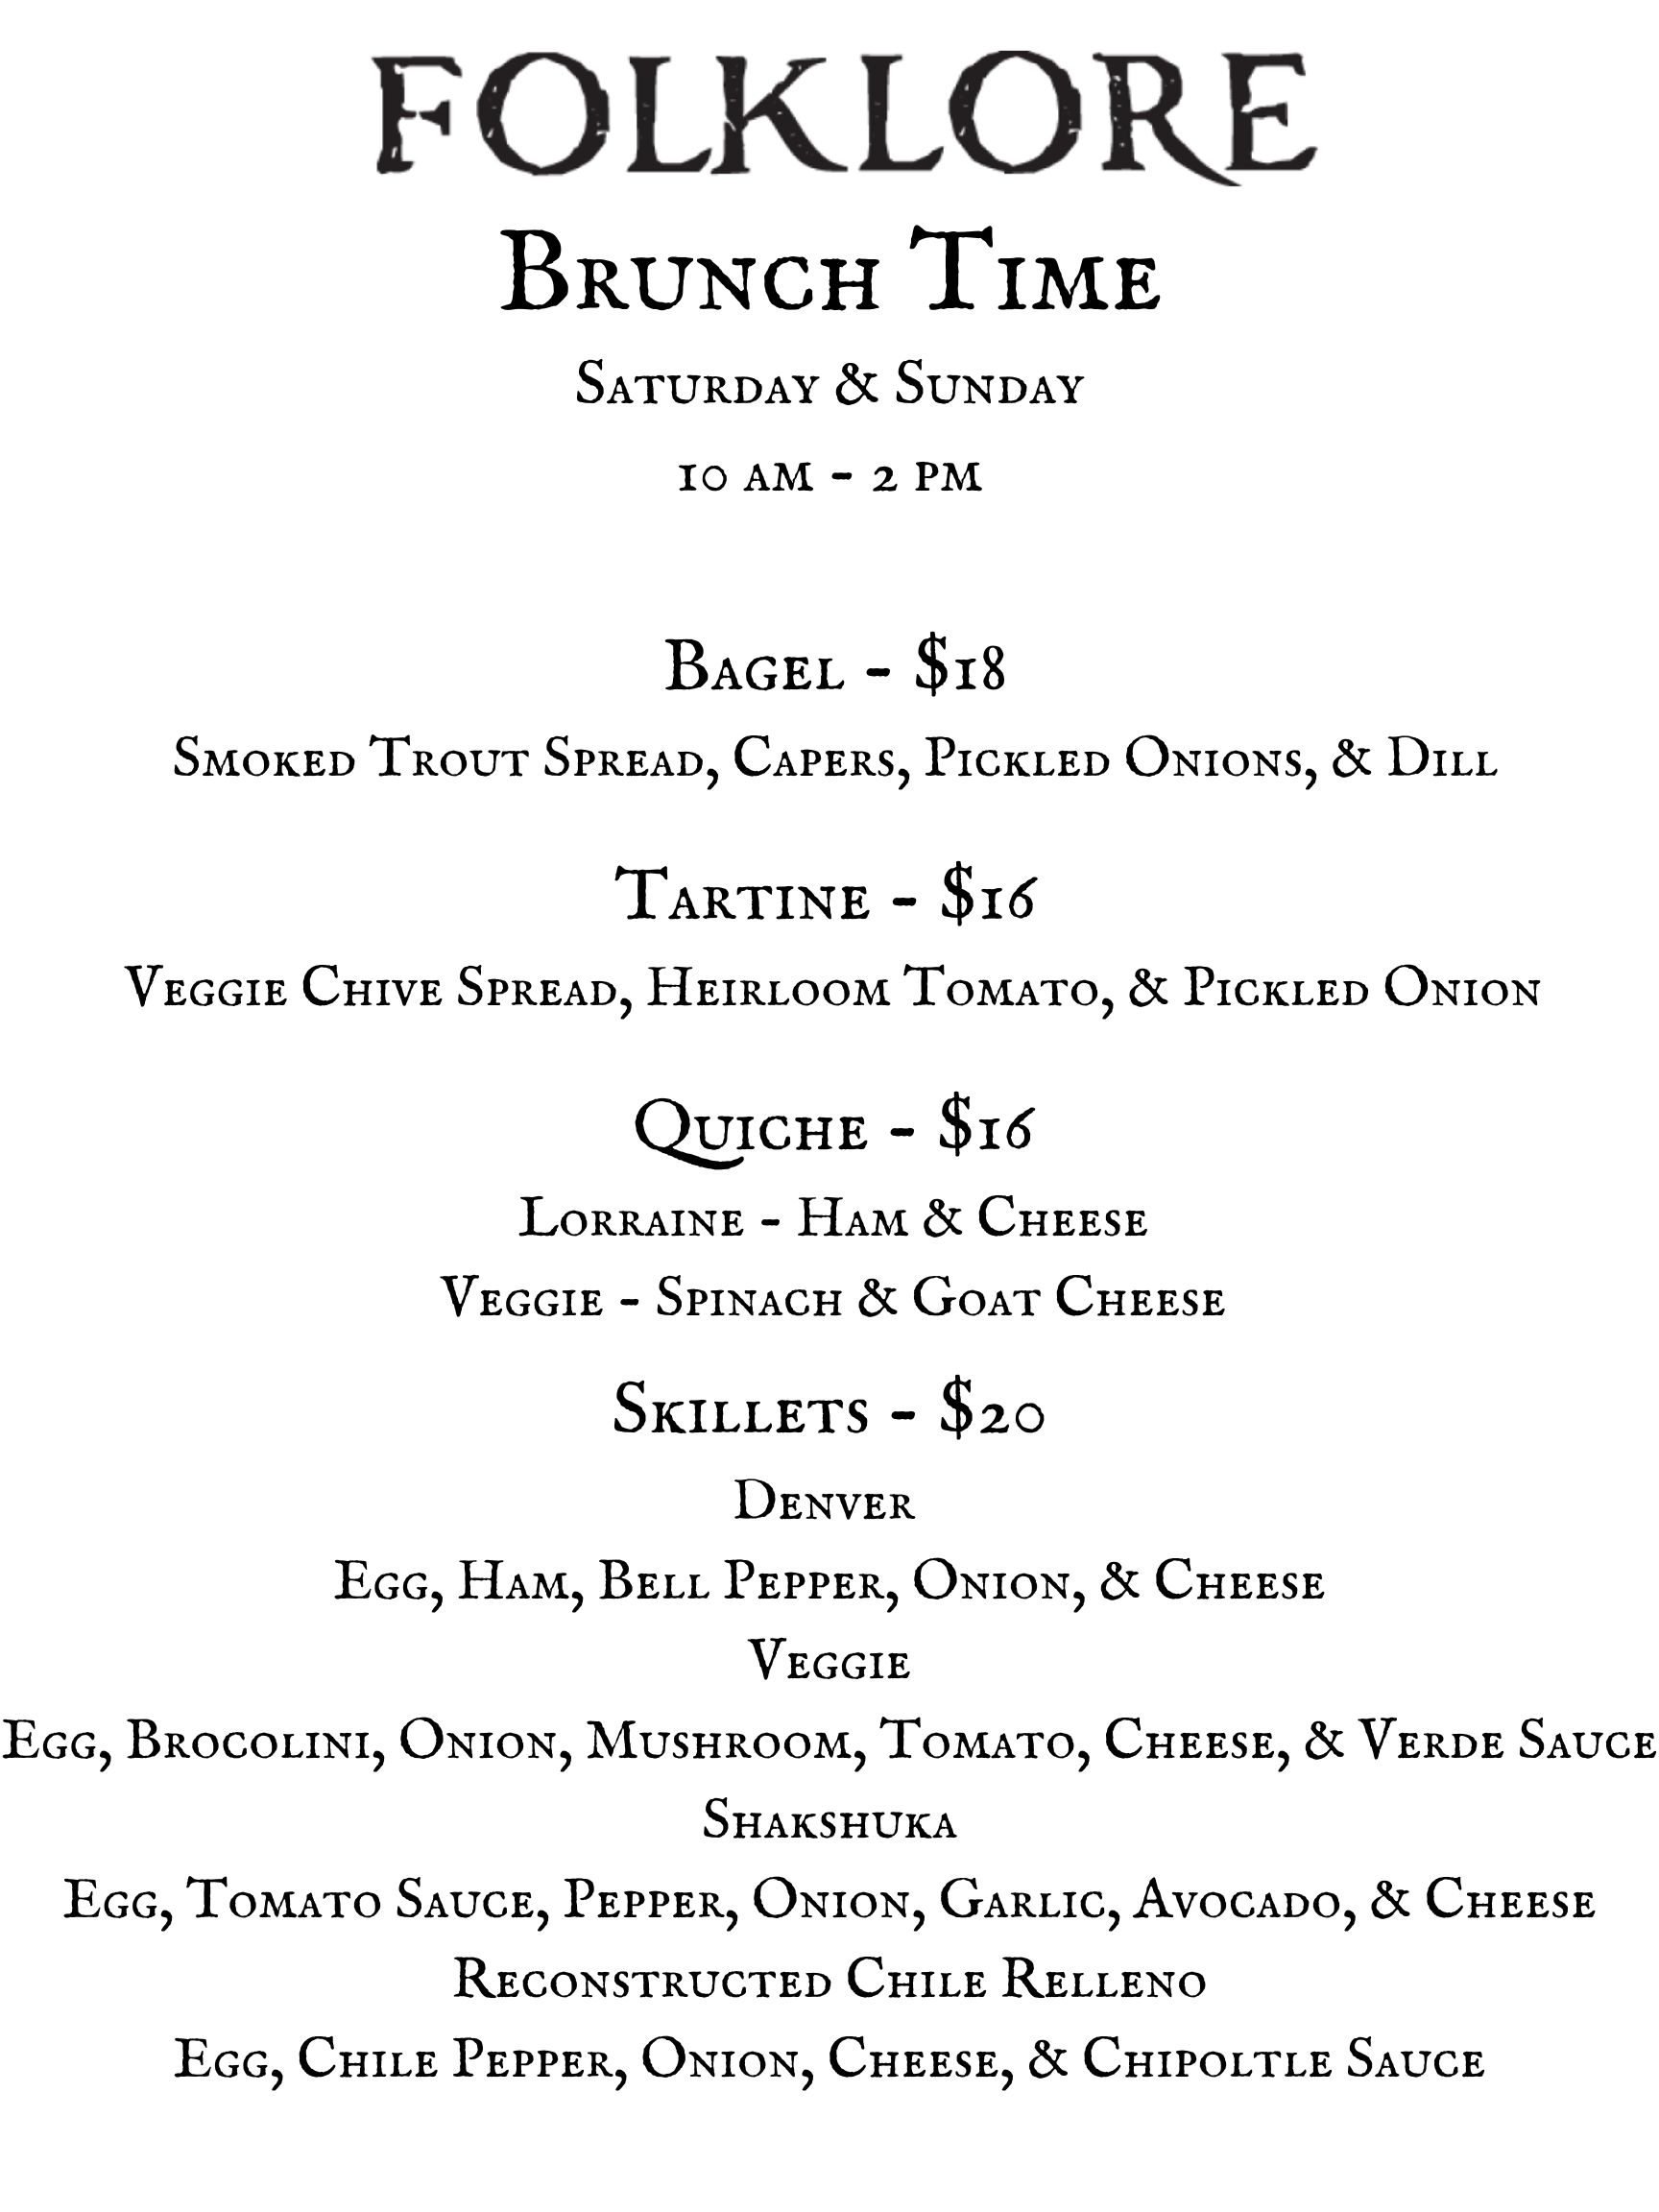 Brunch menu - 1